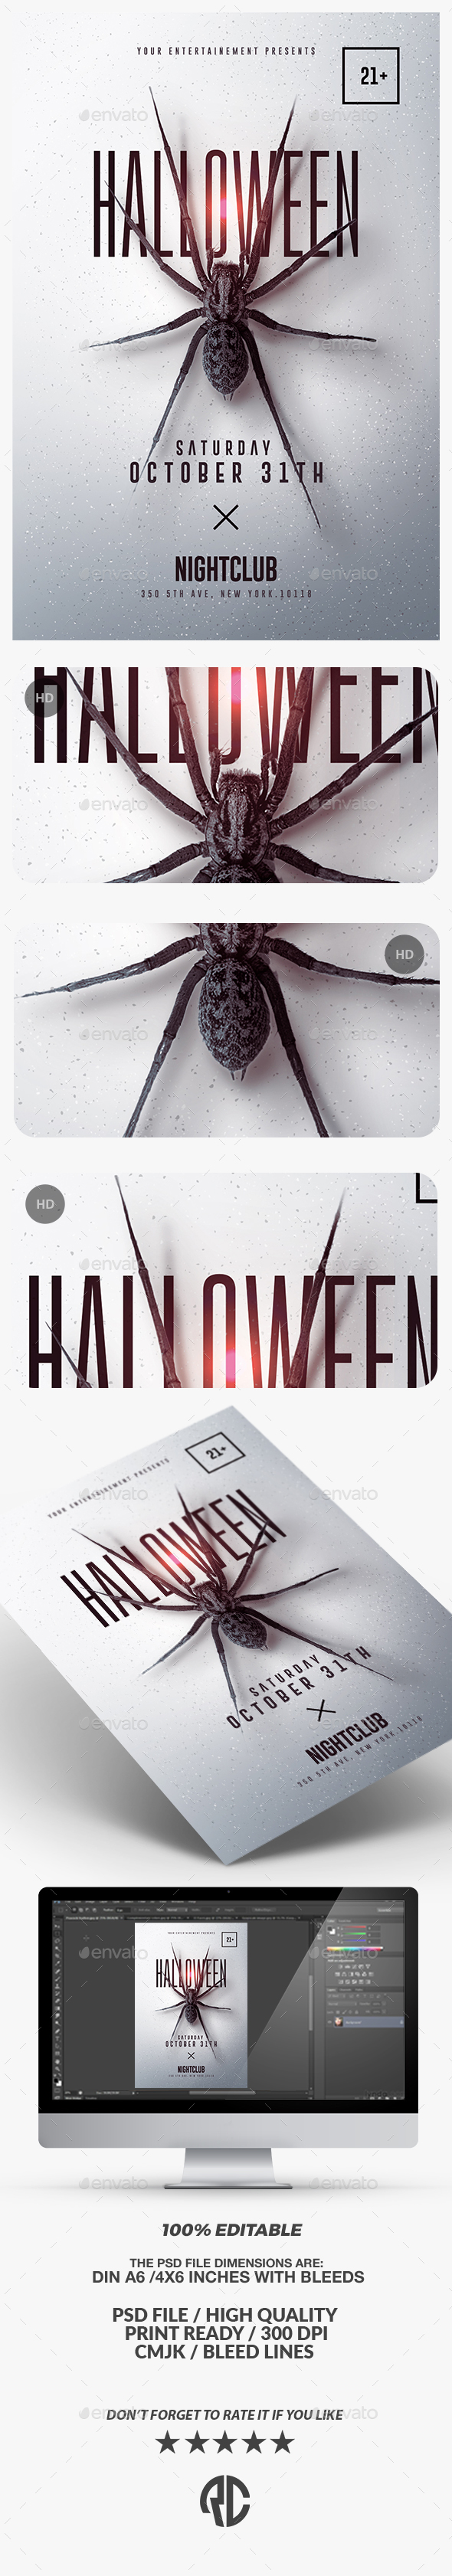 Halloween Minimalist Flyer v2